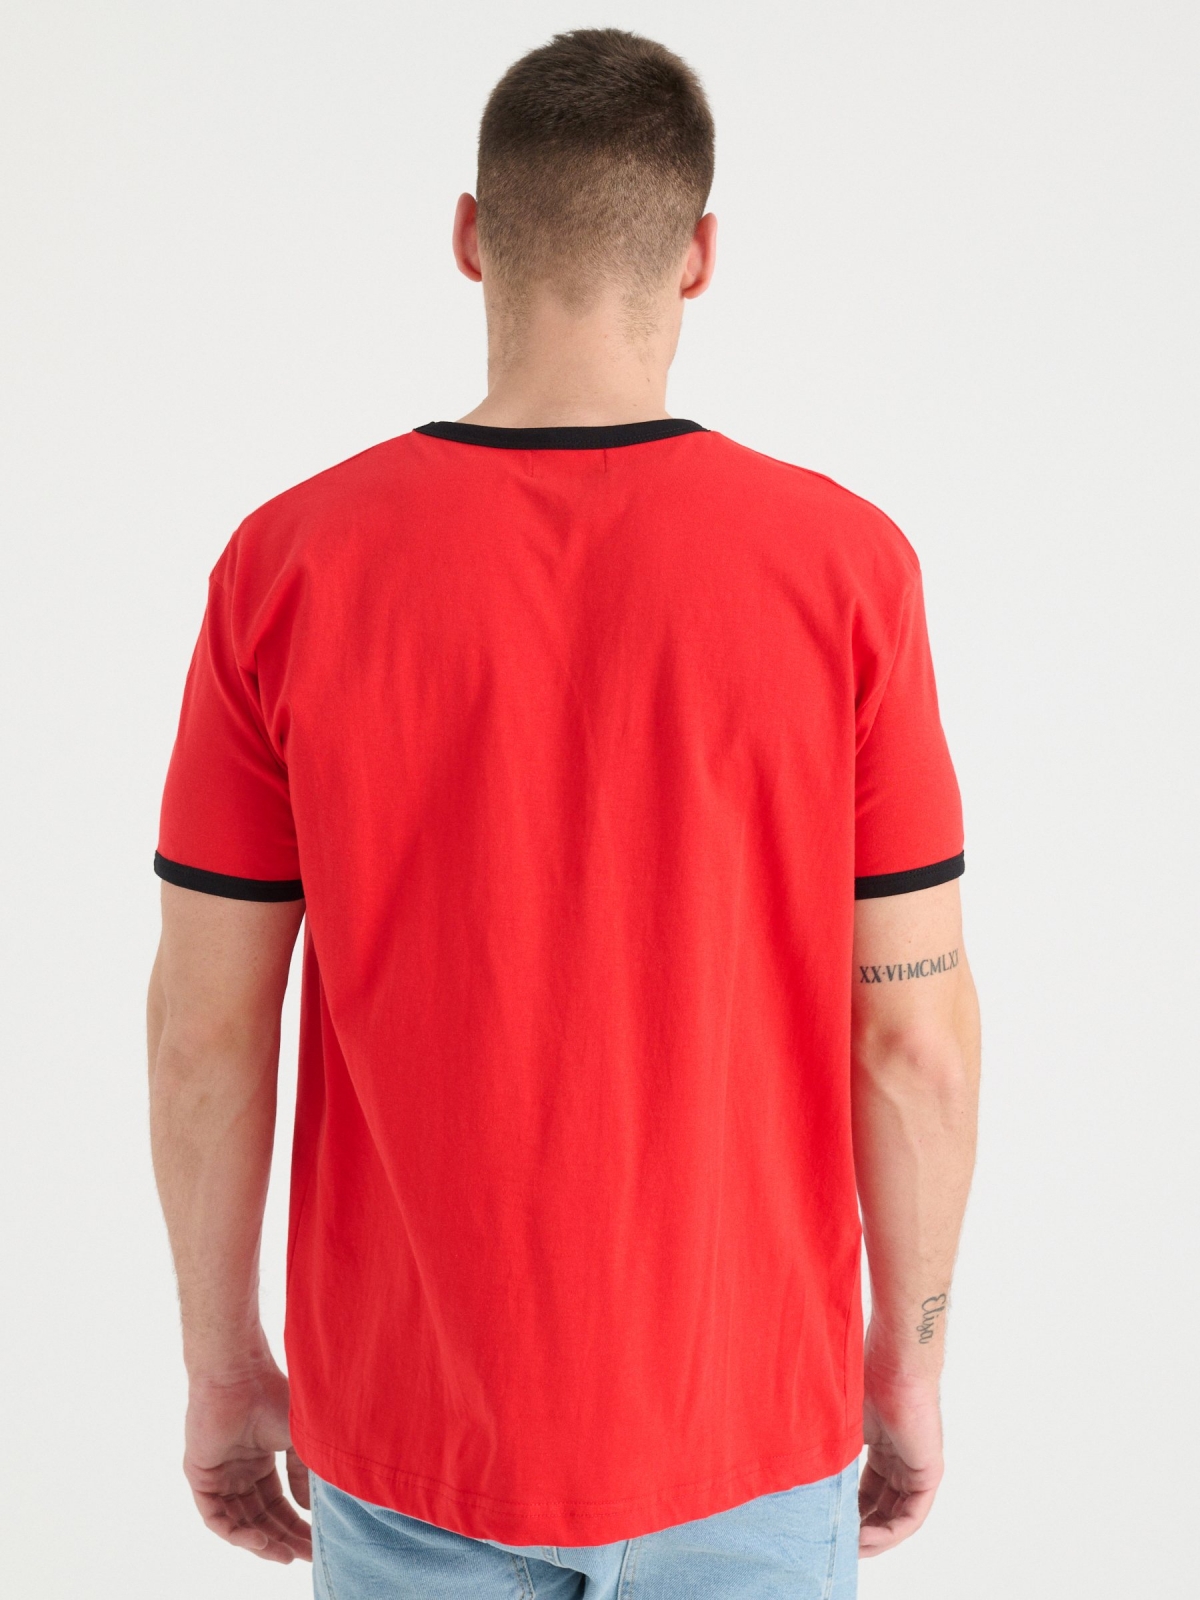 Camiseta básica contrastes rojo vista media trasera